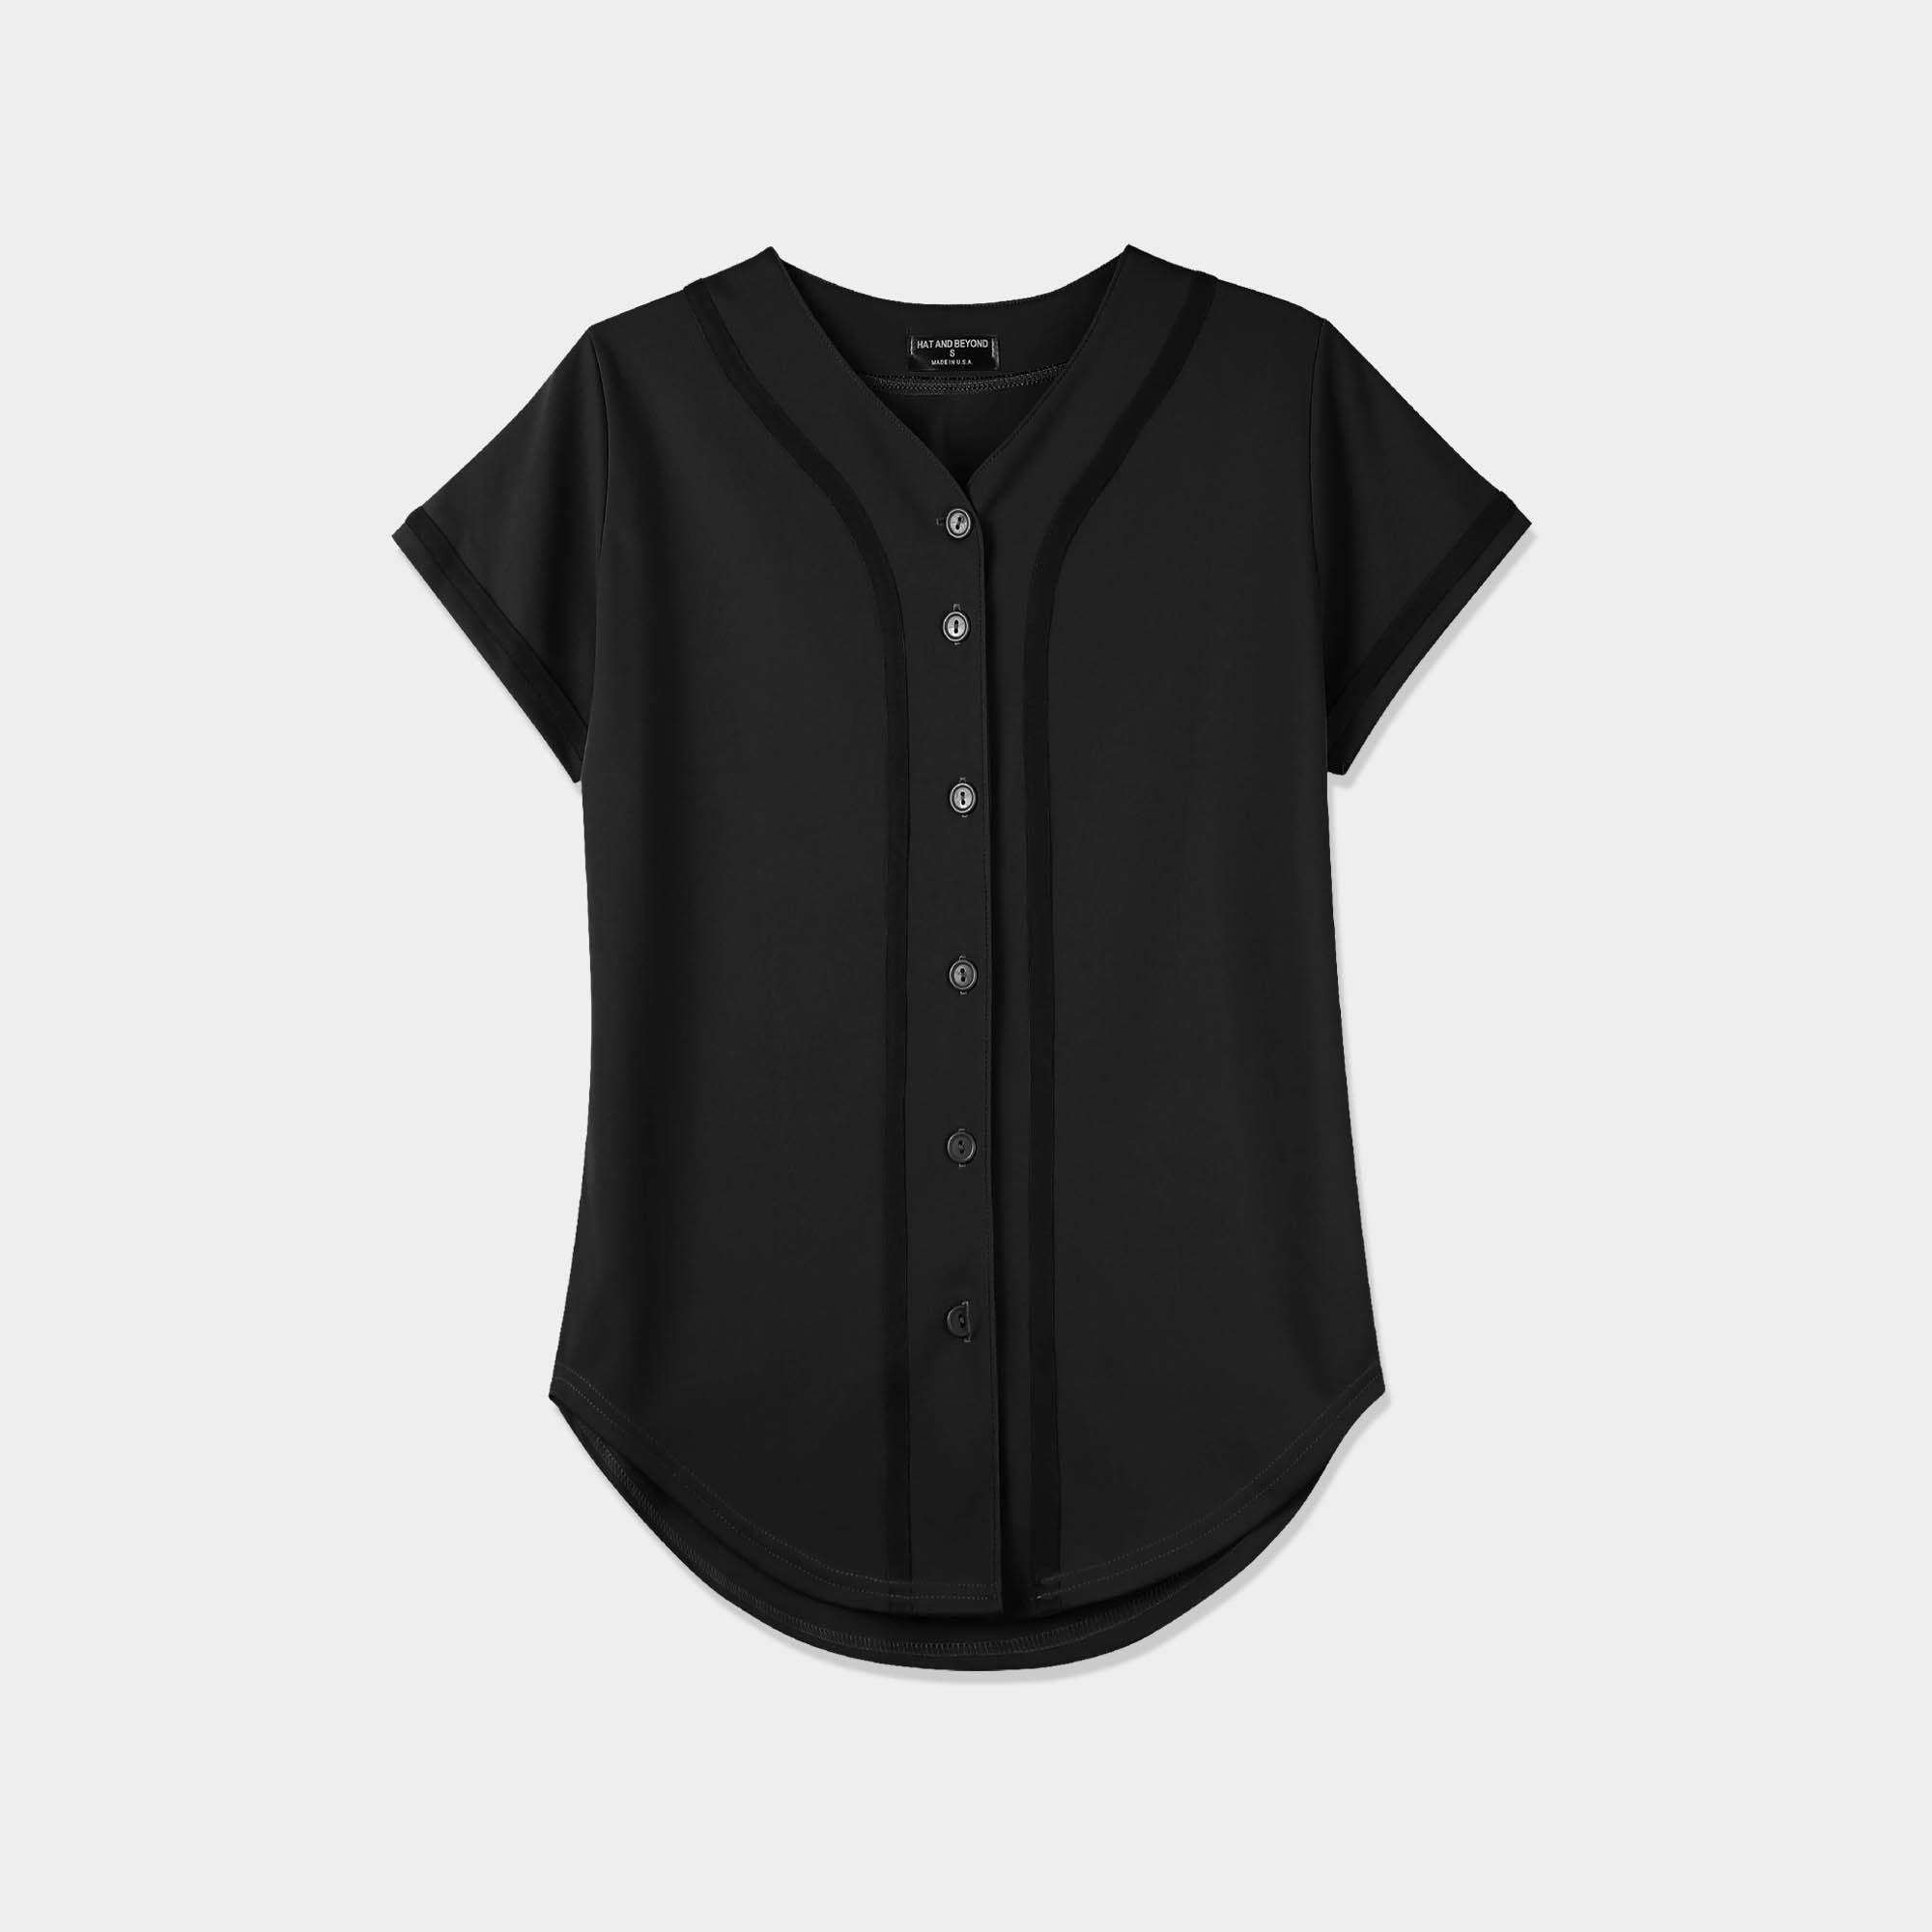  Women's Baseball Jerseys Blank Button Down V-Neck Softball Team Uniform  Fashion Simple Wide Stripe Short Sleeve (Black,XS,X-Small,Regular,Regular)  : Clothing, Shoes & Jewelry